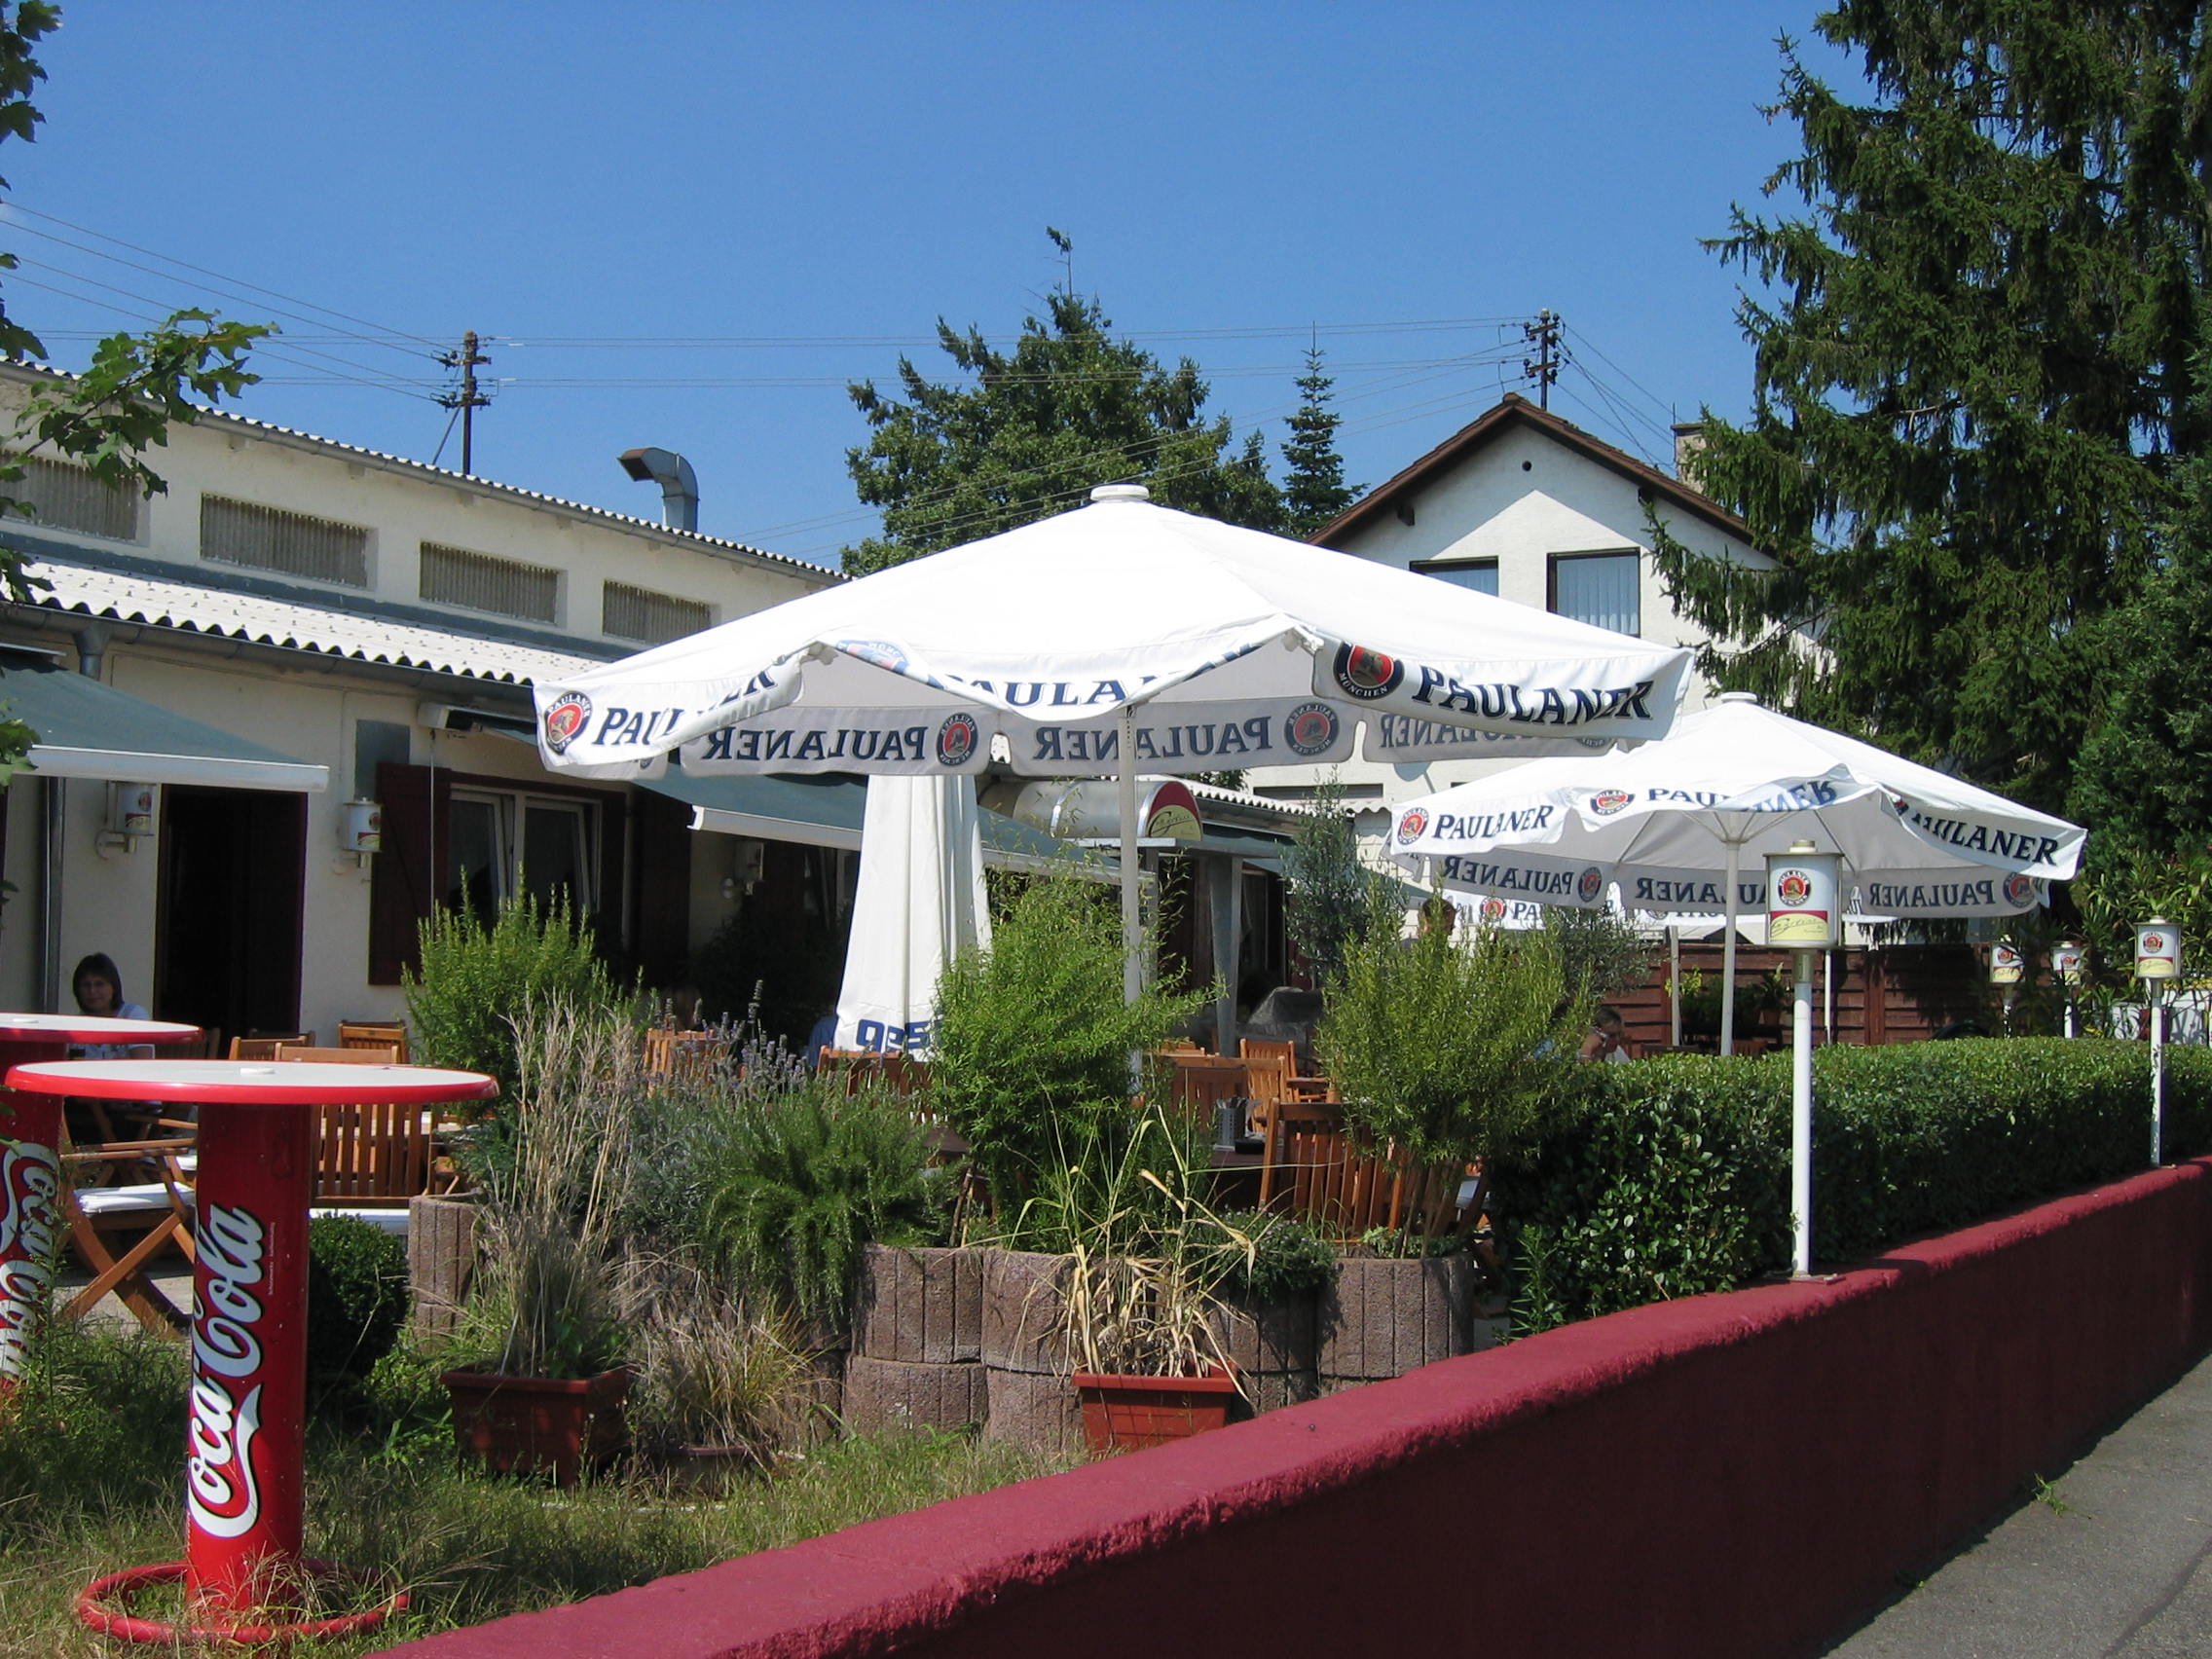 Datei:Flugplatz Restaurant.jpg